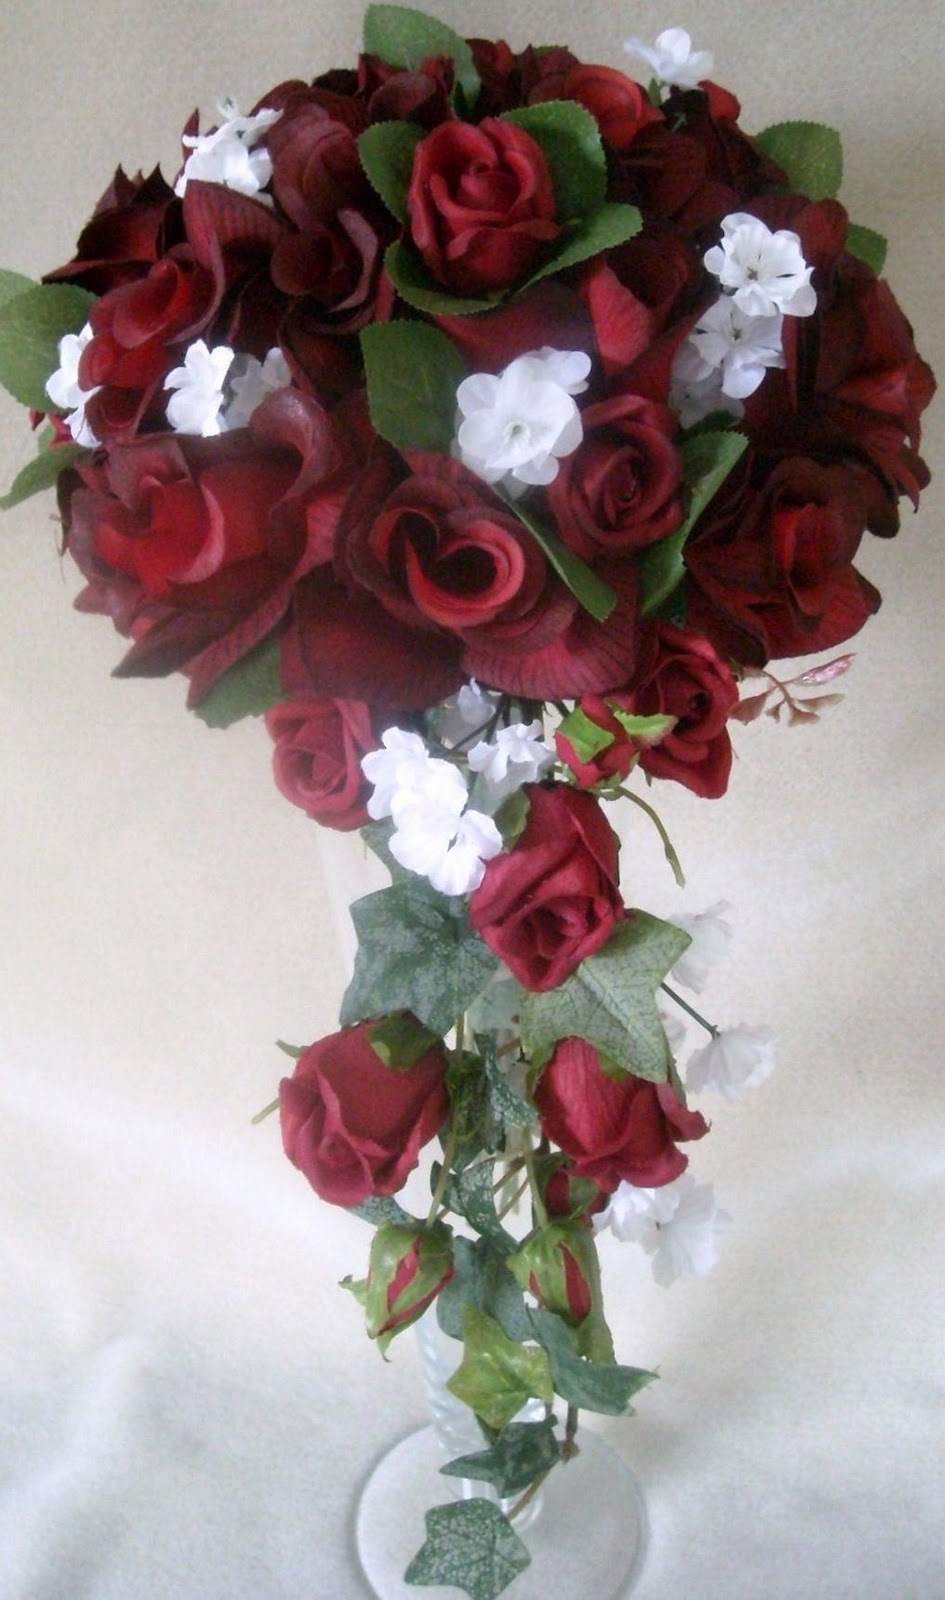 Bridal Cascading Bouquet is